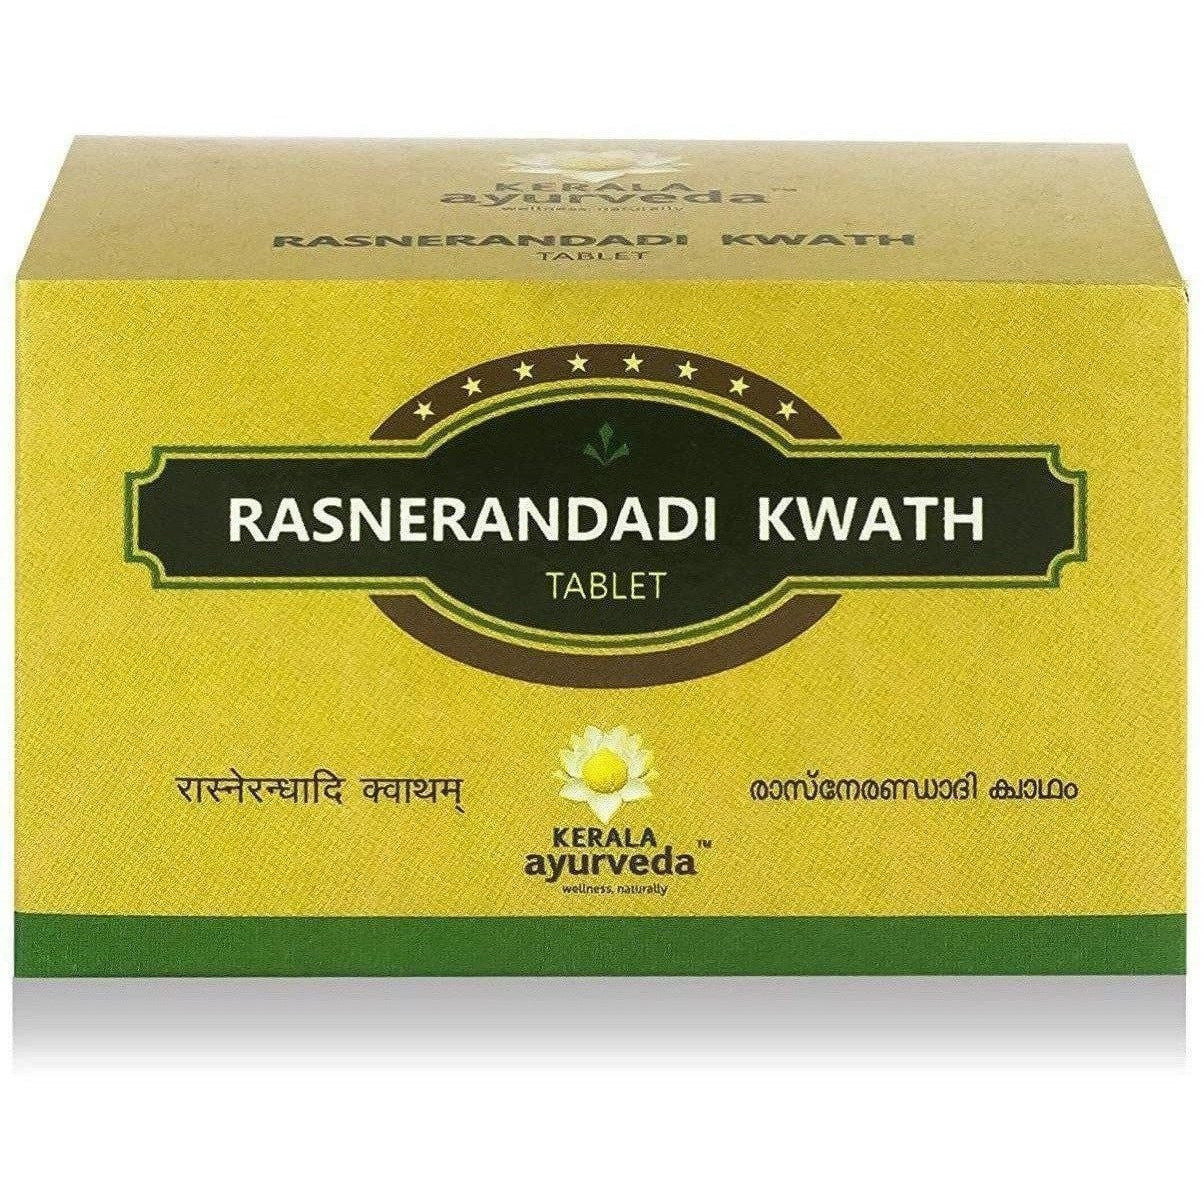 Kerala Ayurveda Rasnerandadi Kwath Tablet